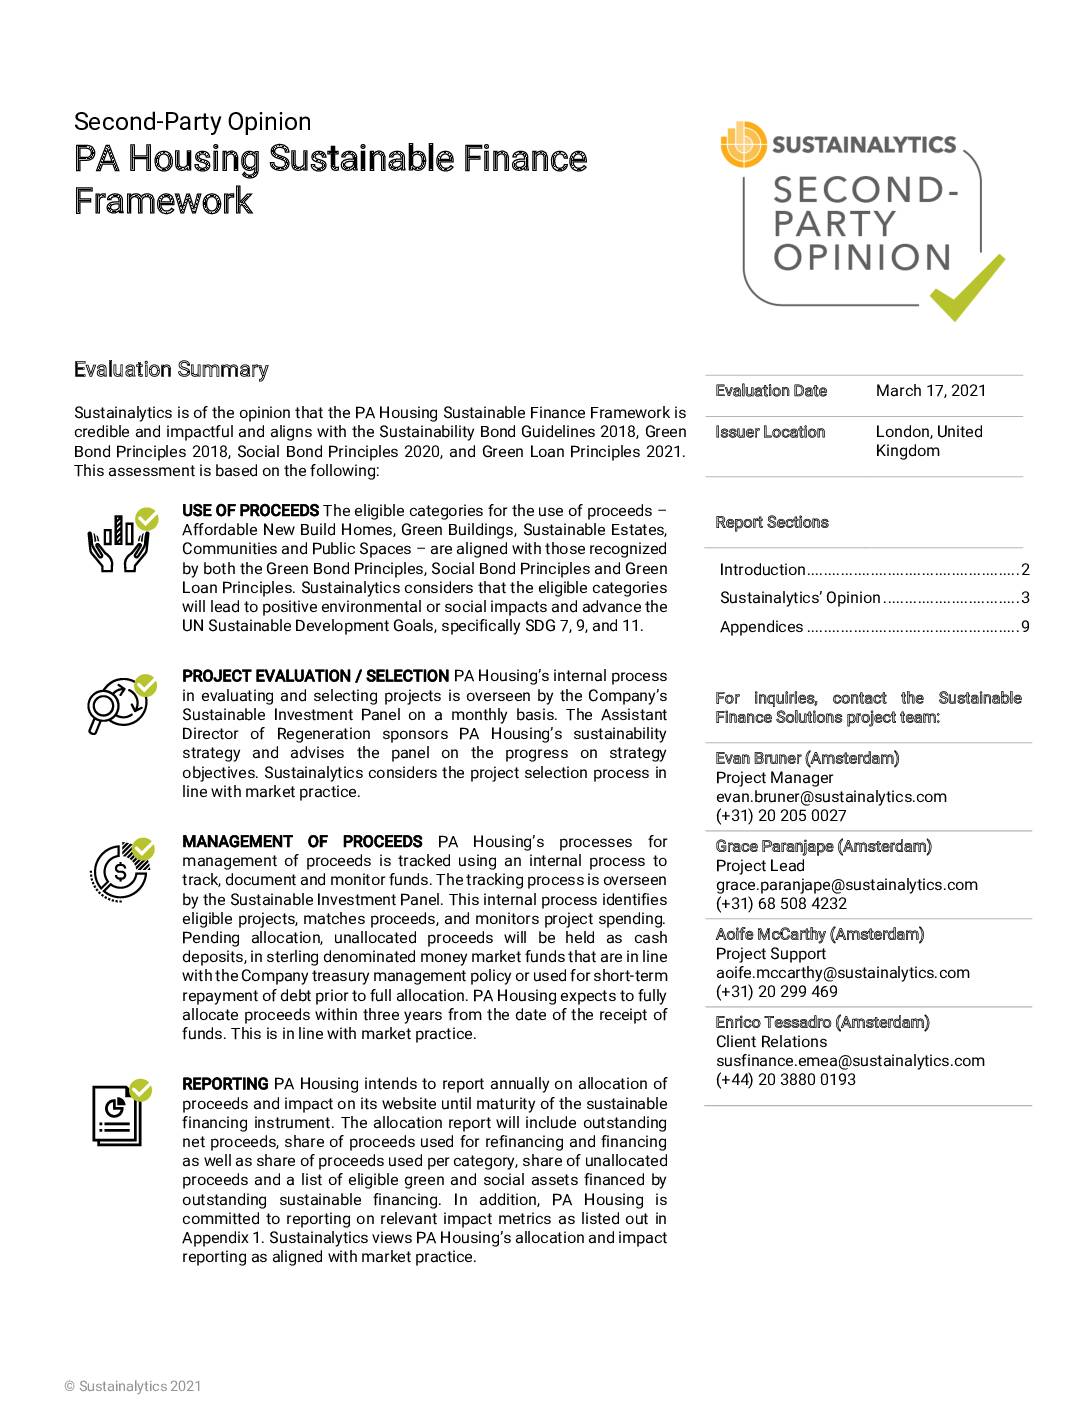 PA Housing Sustainable Finance Framework